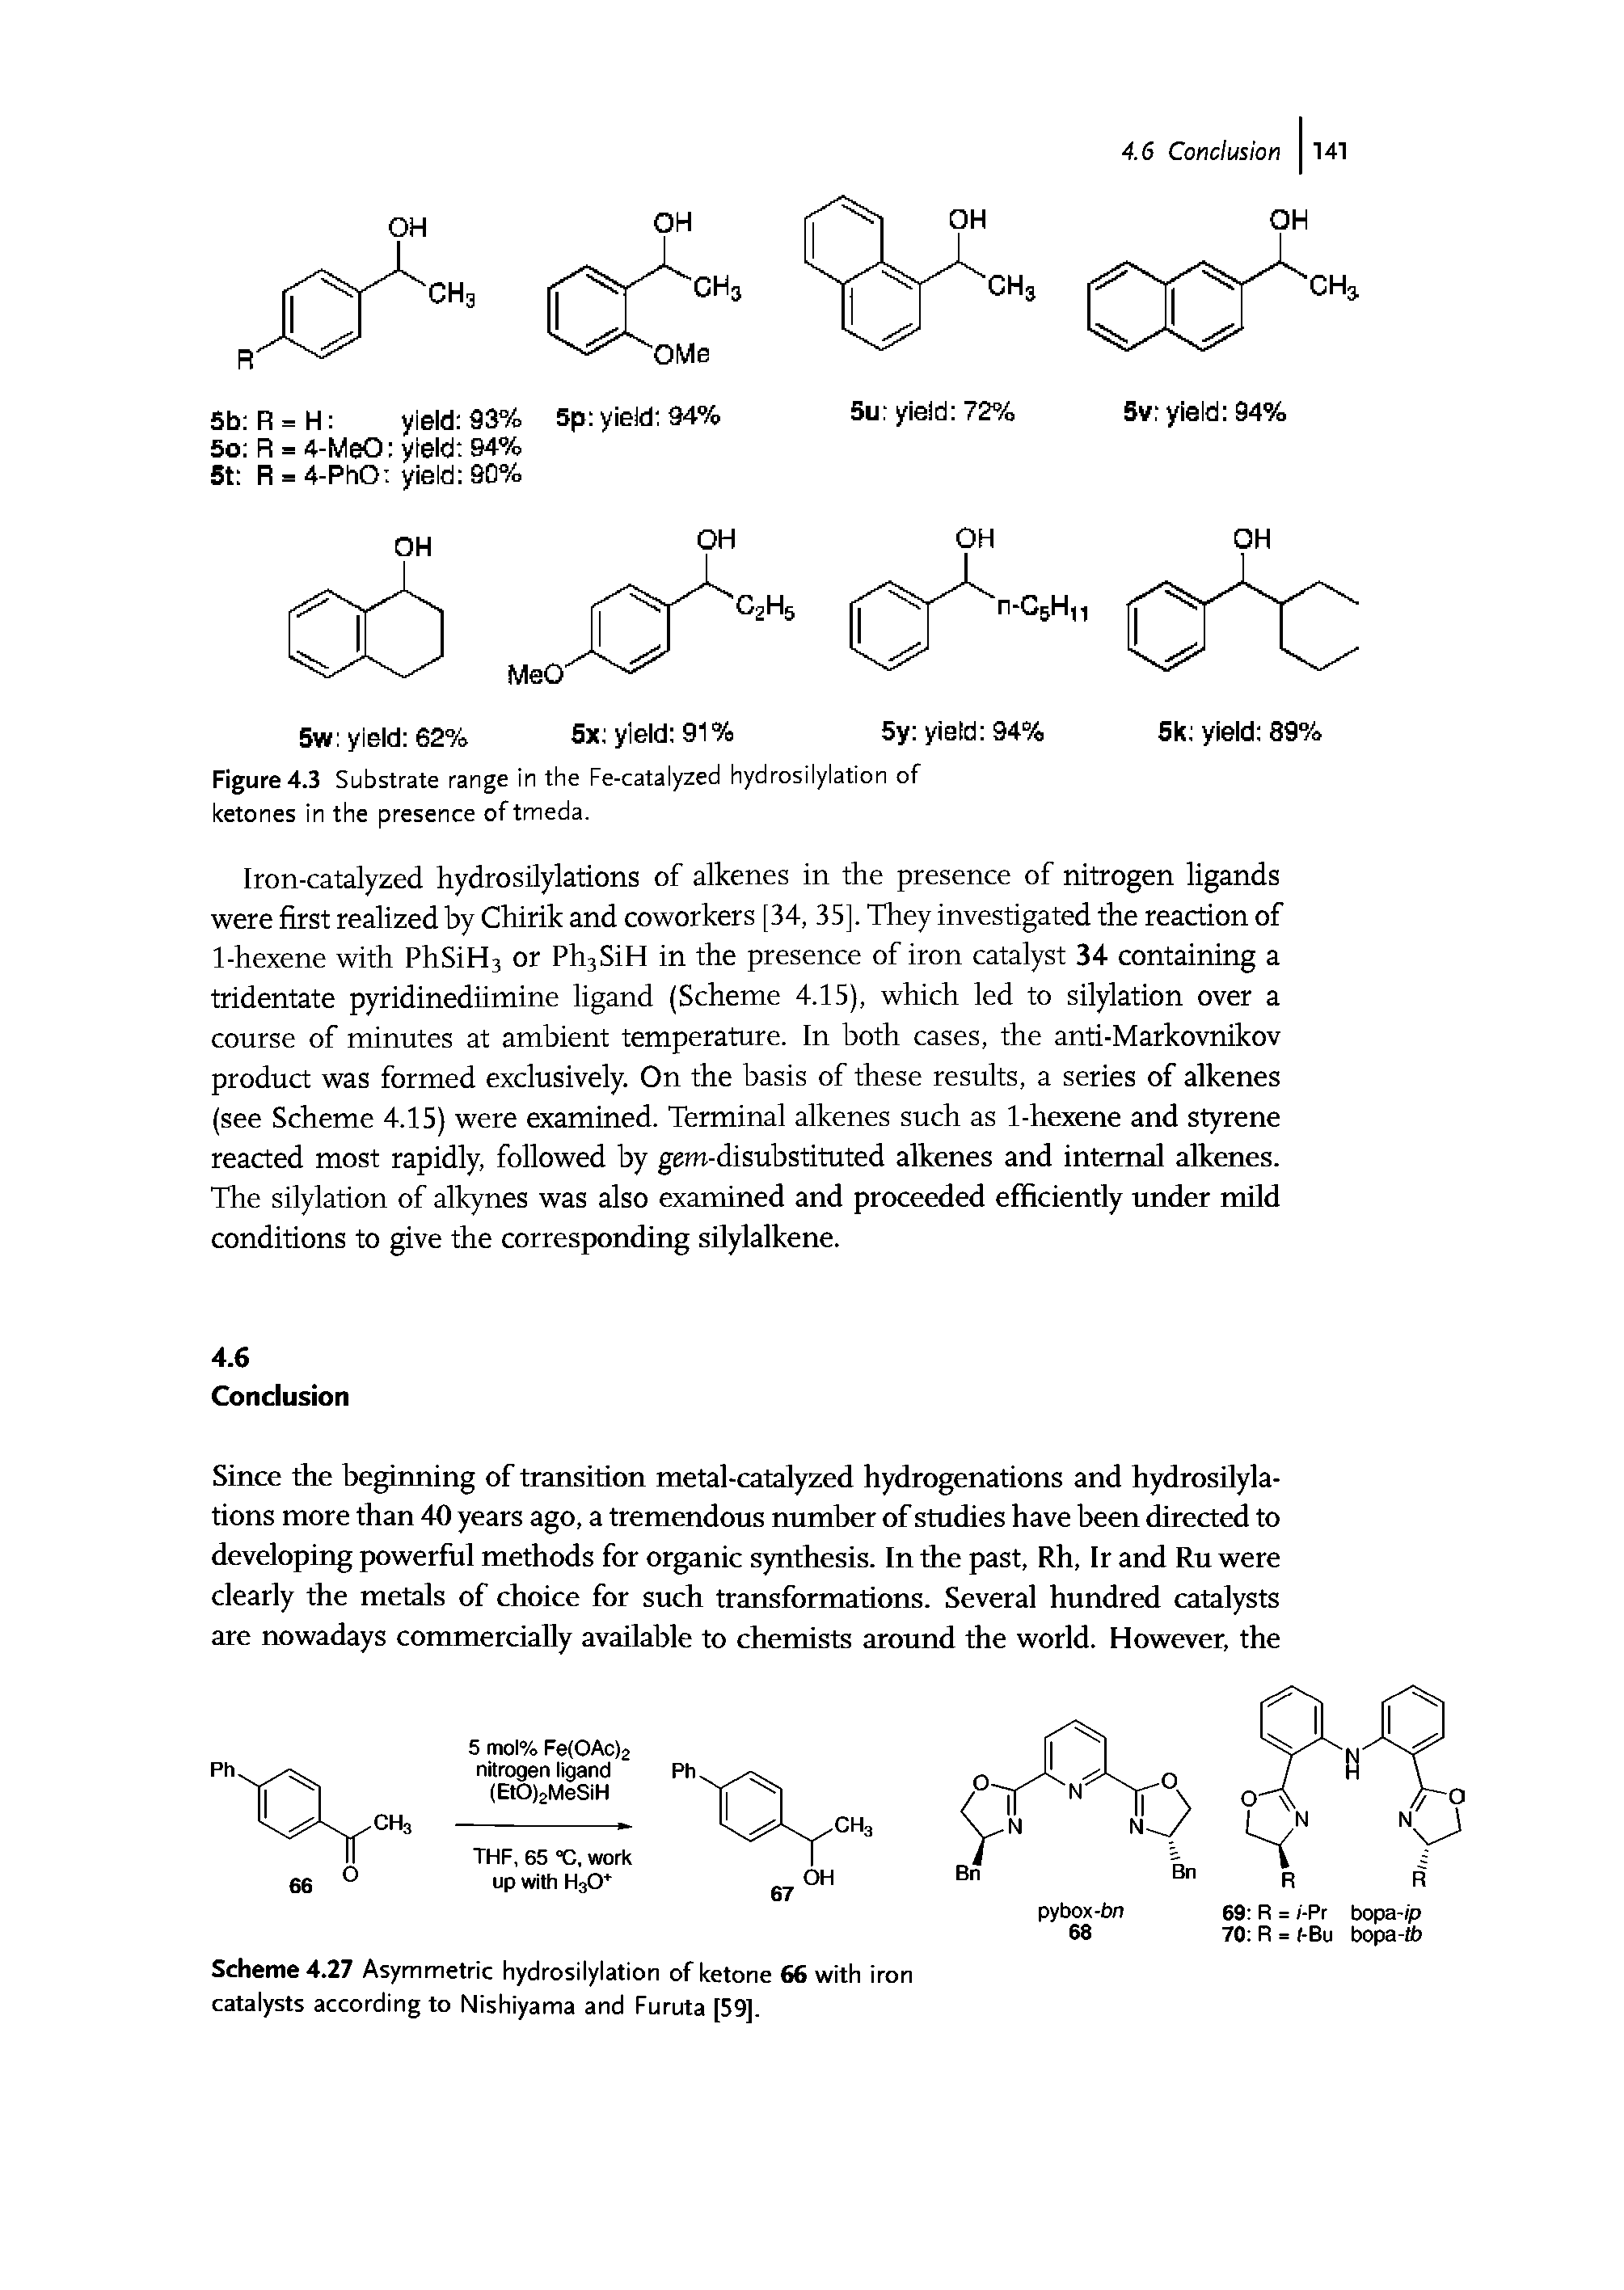 Scheme 4.27 Asymmetric hydrosilylation of ketone 66 with iron catalysts according to Nishiyama and Furuta [59],...